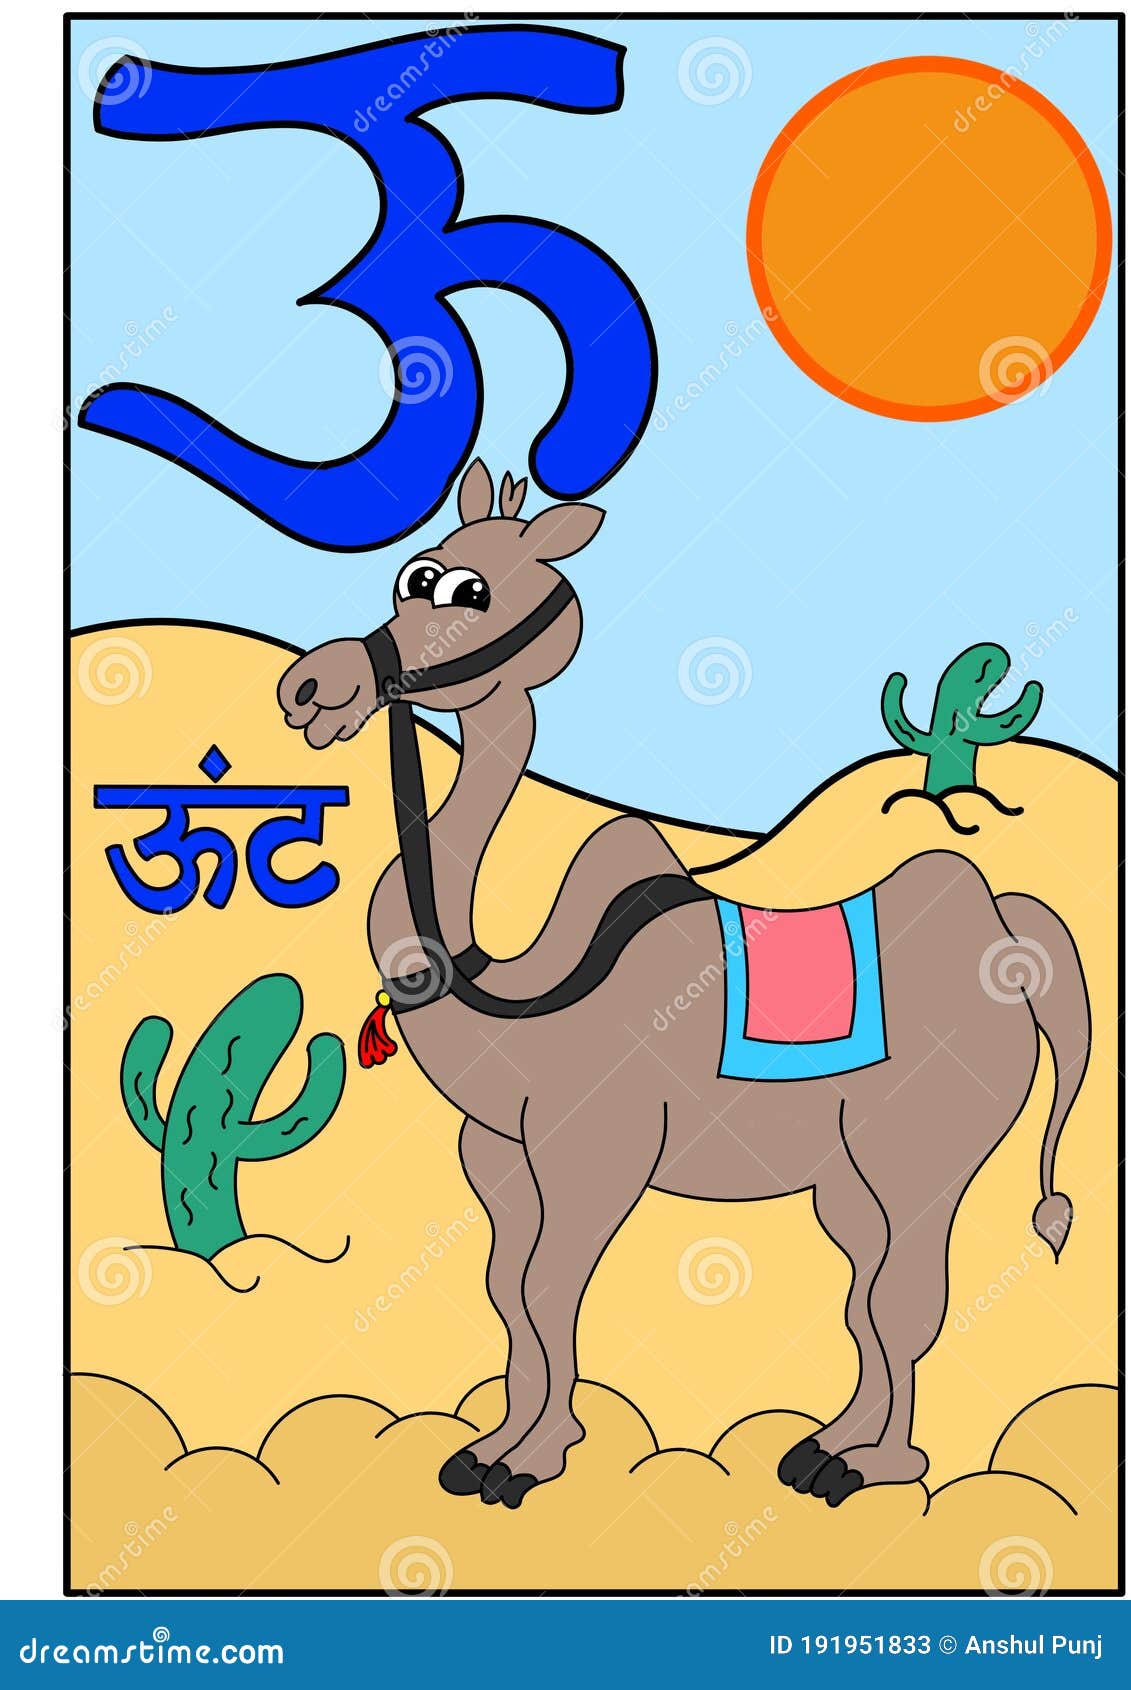 Learn Hindi Language Alphabets for Kindergarten Preschool and Beginners  Letter Vowel that Sound Uu. Camel in Desert Cute Cartoon Stock Illustration  - Illustration of vowel, camel: 191951833